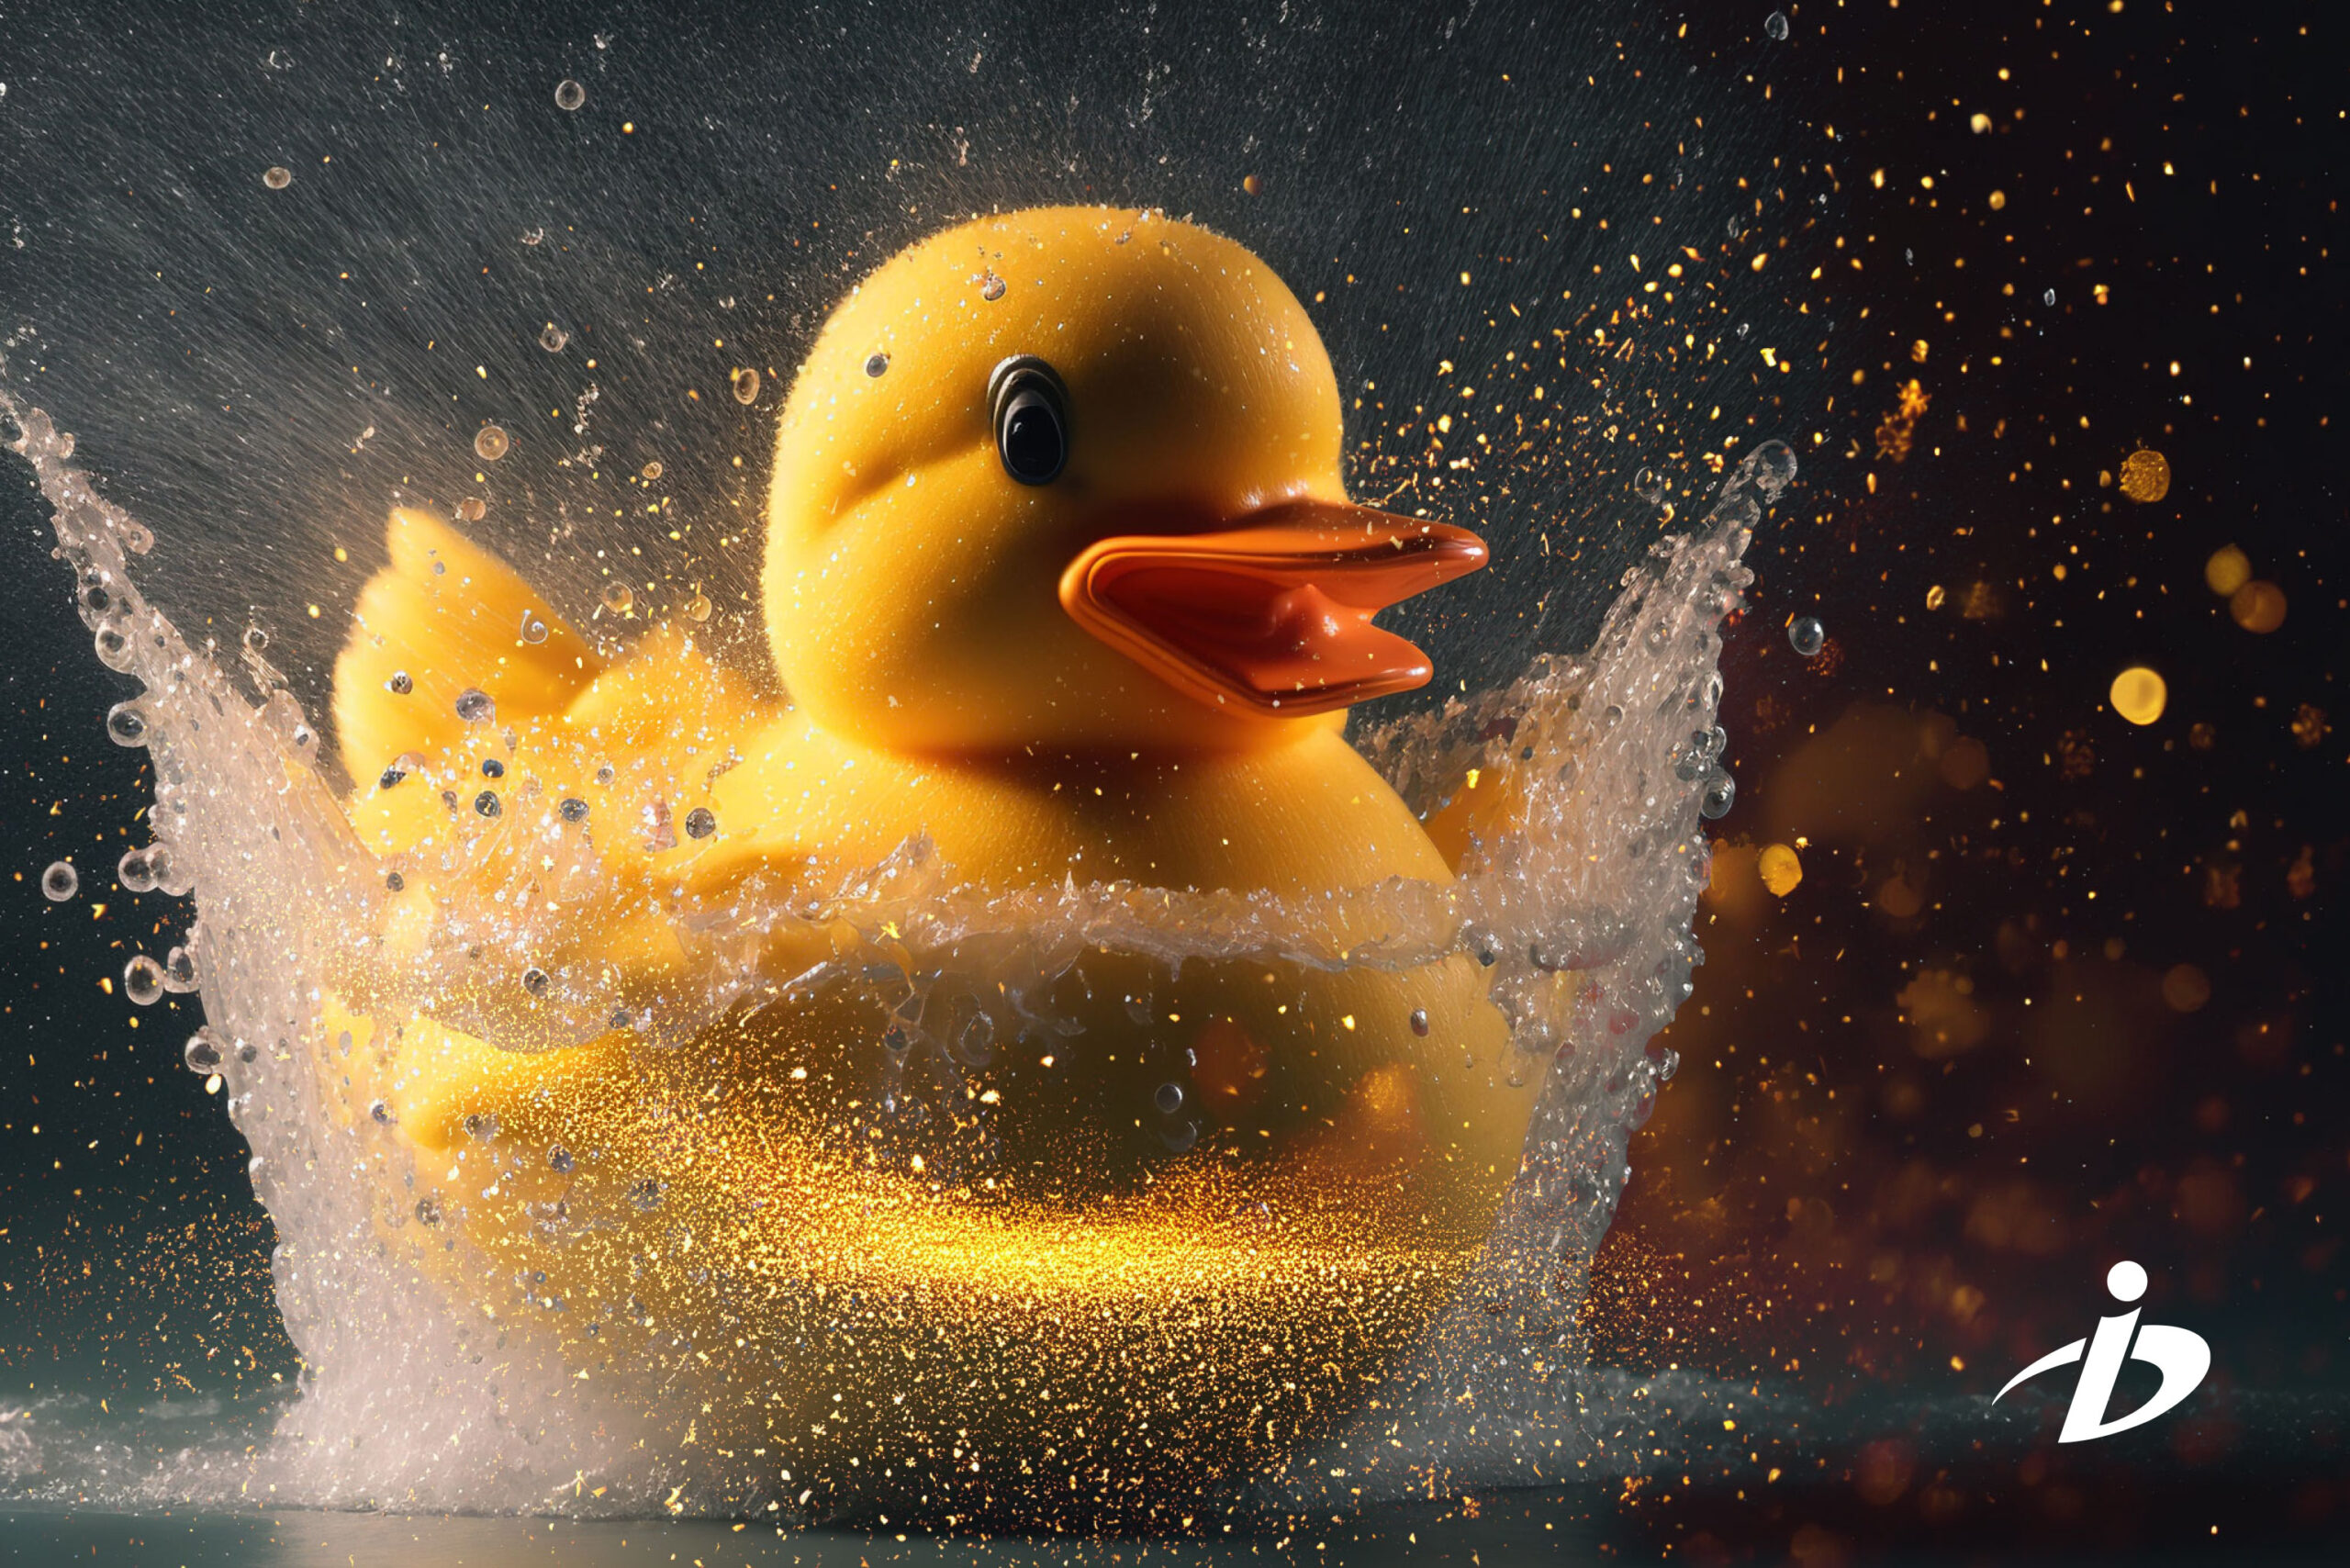 SEWP team mascot (rubber duck) splashing in water and gold galaxy glitter (training, news)